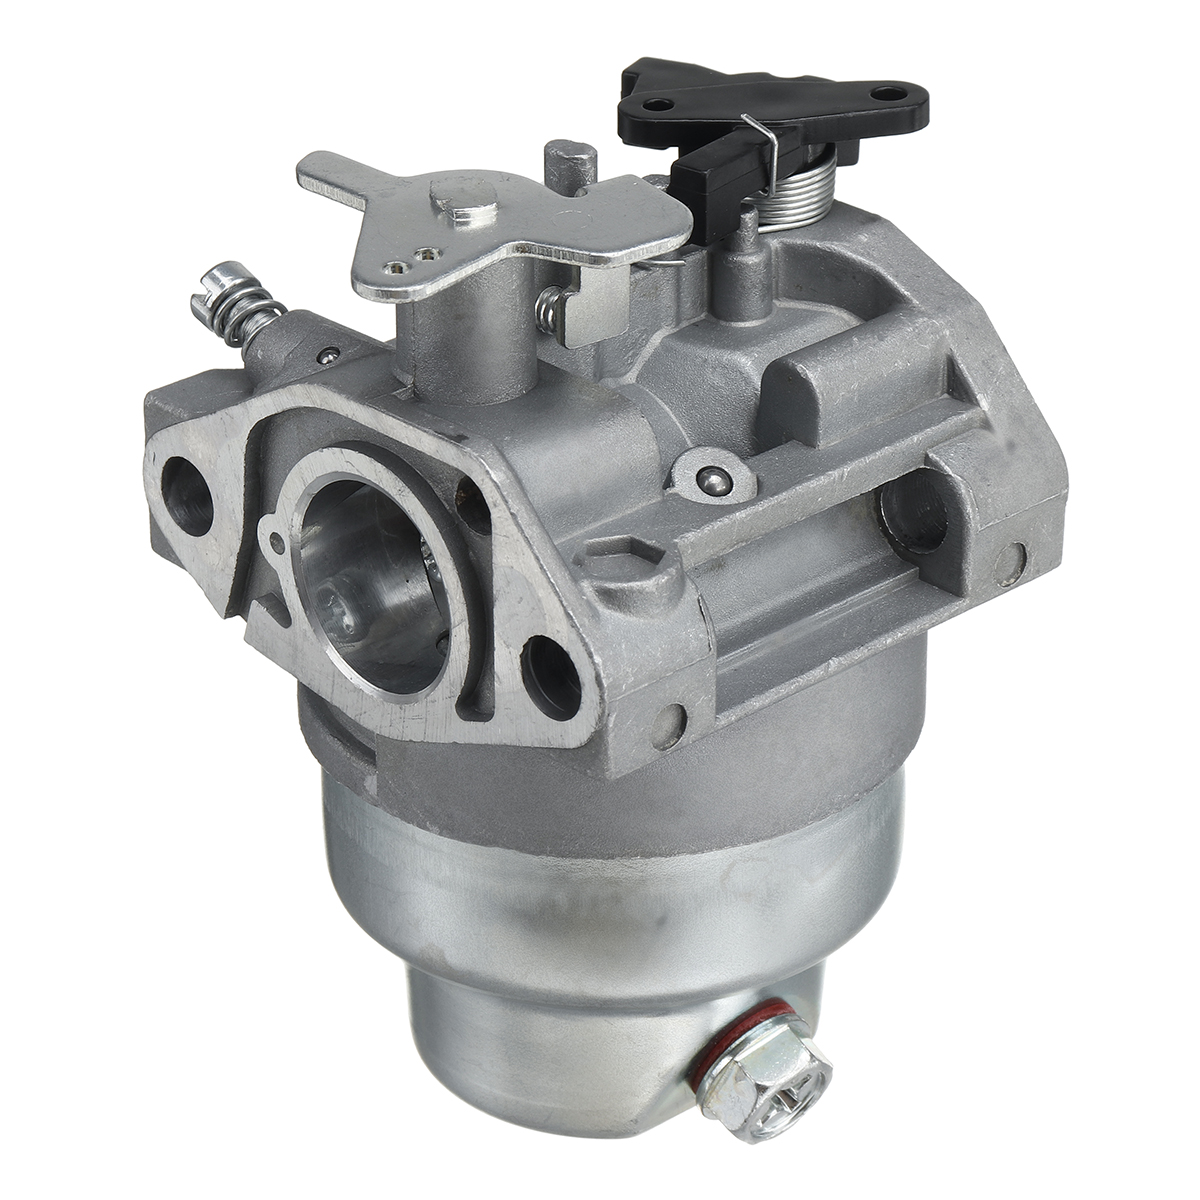 Carburetor-Intake-Kit-Air-Filter-Gaskets-with-Fuel-Line-for-Honda-GCV160-GCV135-Mower-Engine-HRU19R--1842970-7